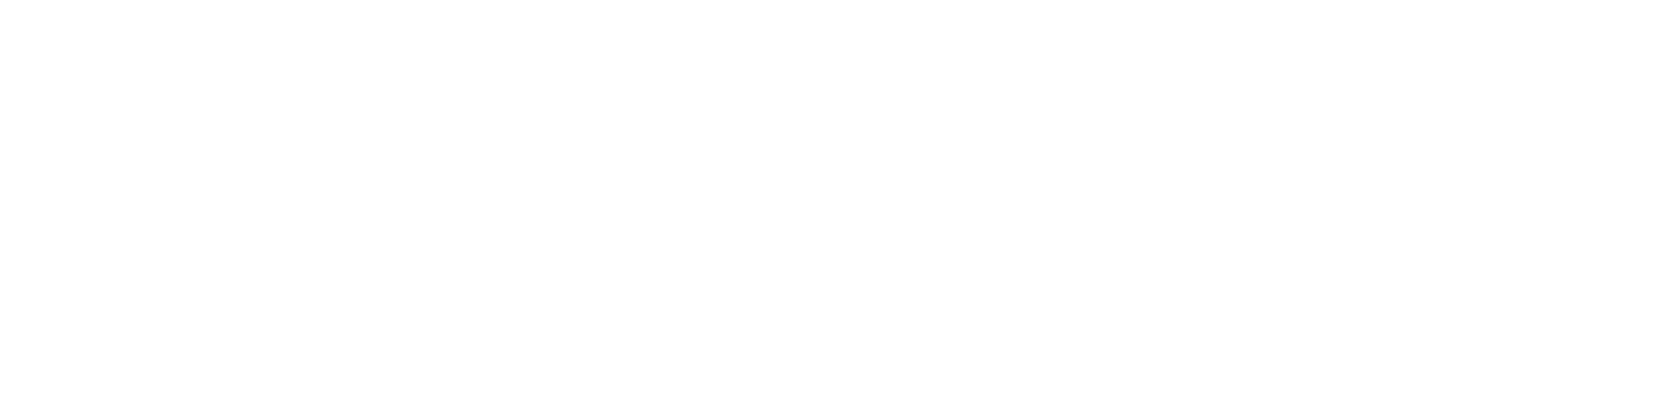 Hellenic Blockchain Association Education Hub